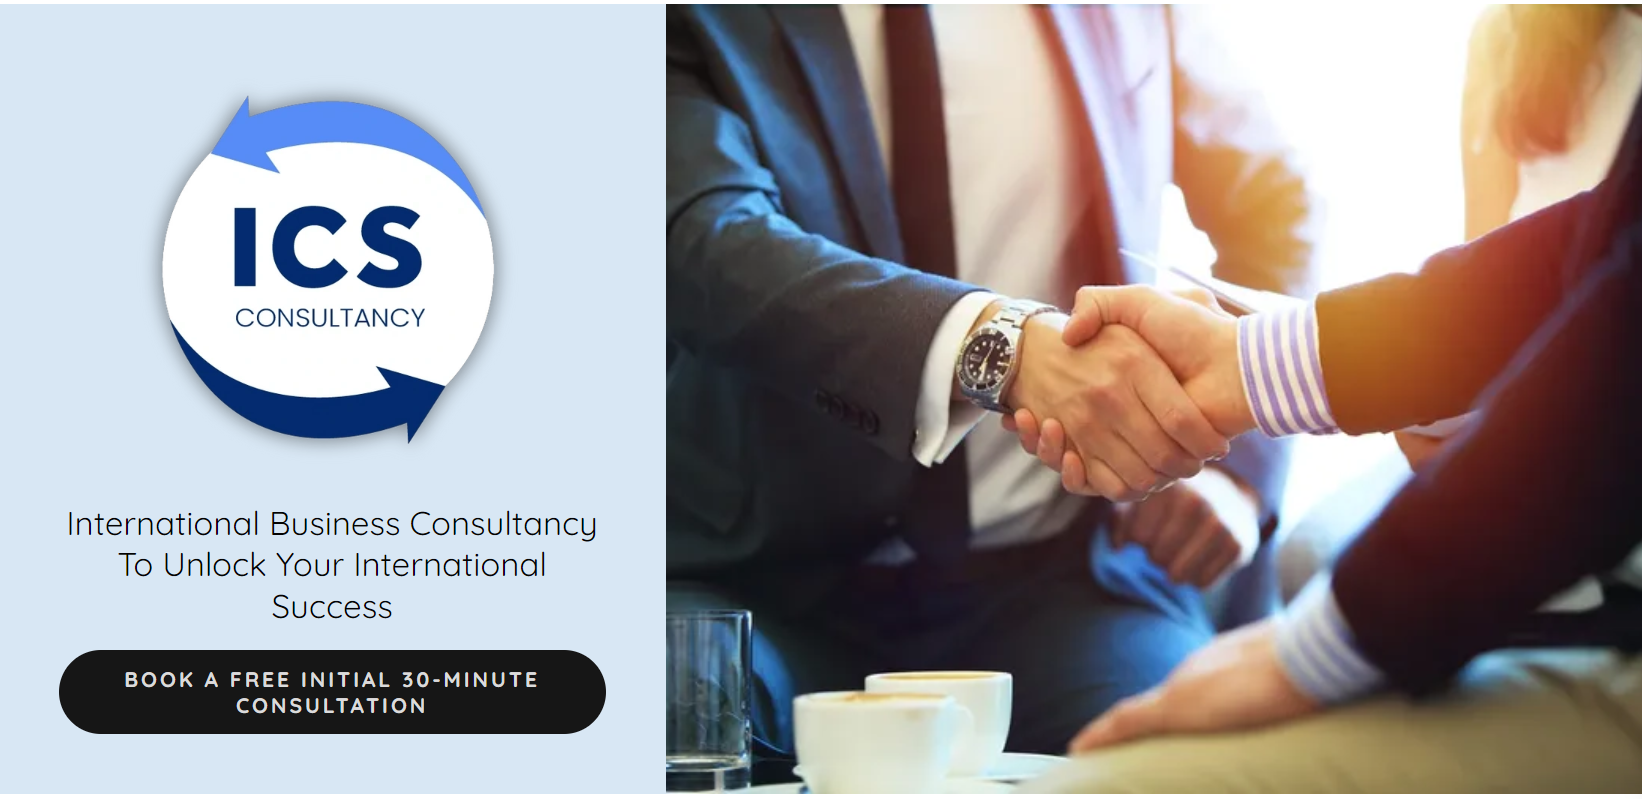 International Business Consultancy Website